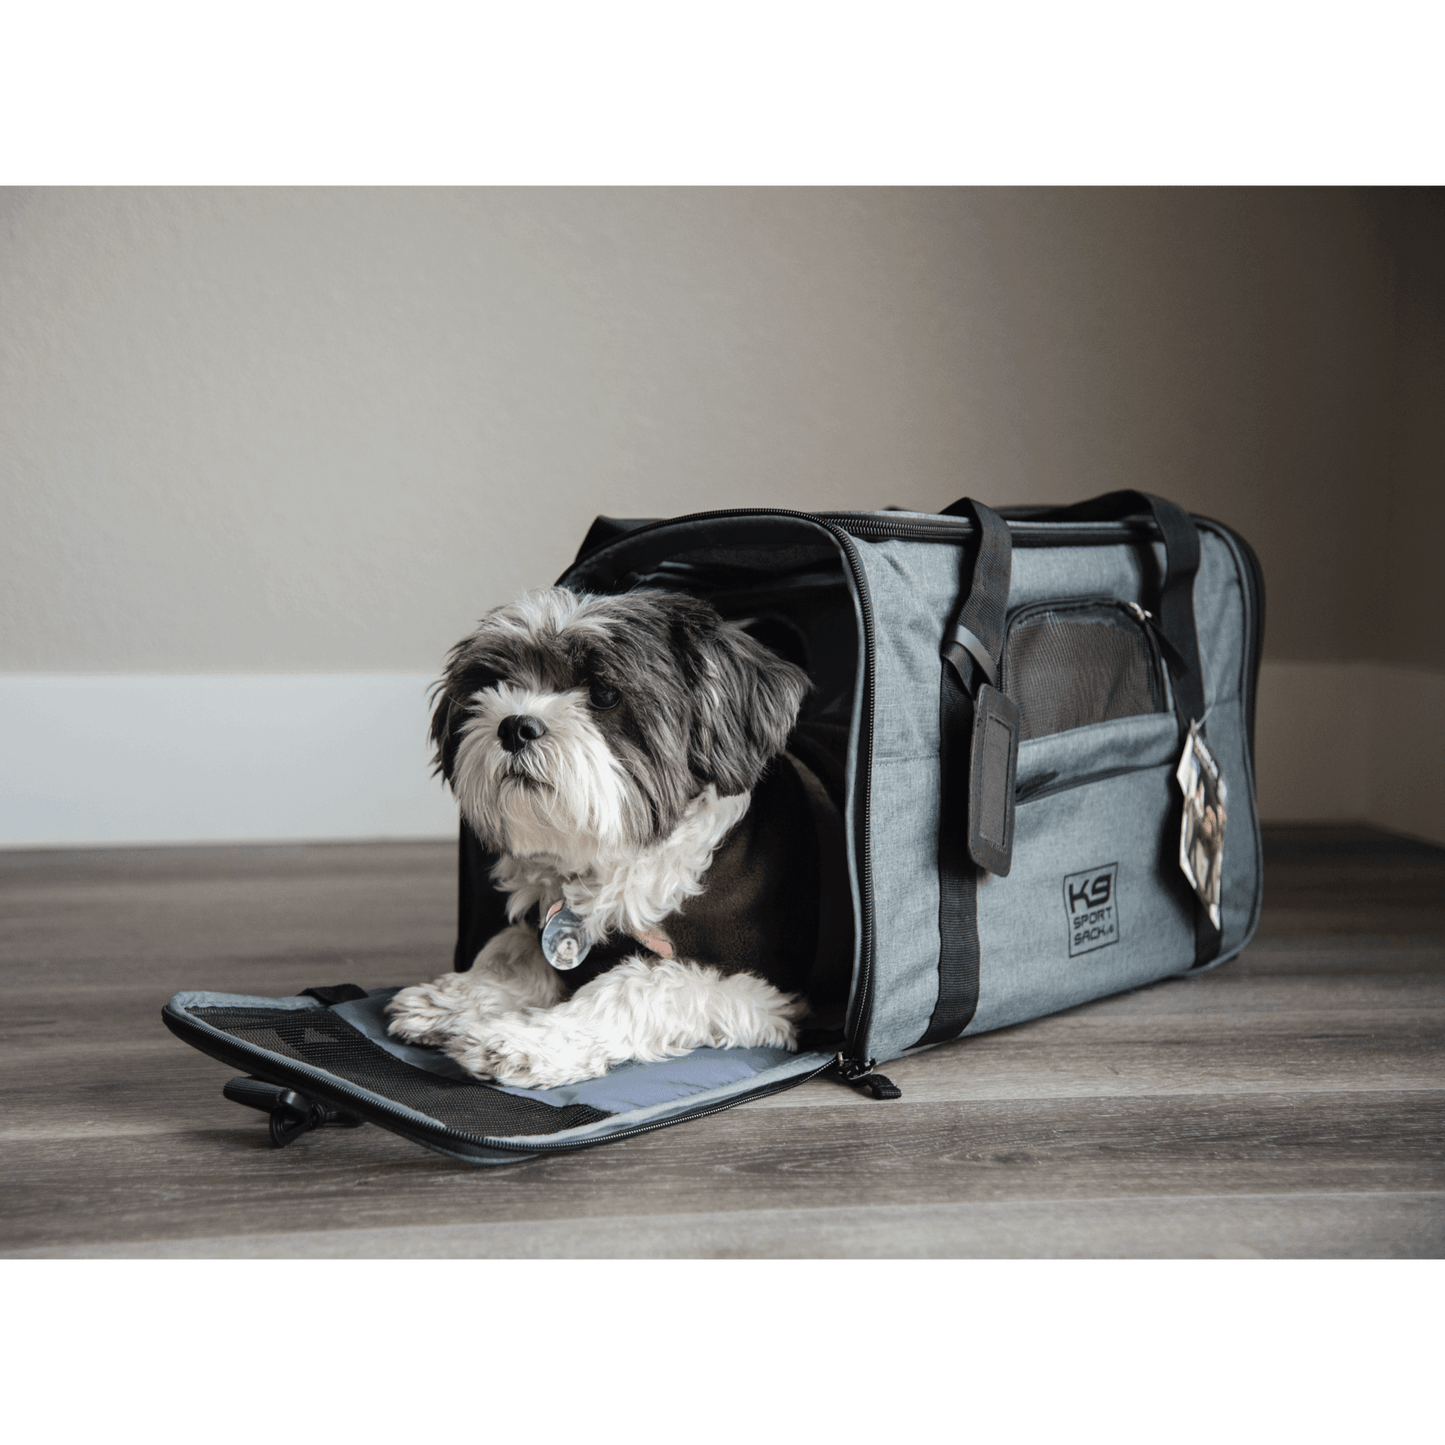 Small dog inside dog carrier